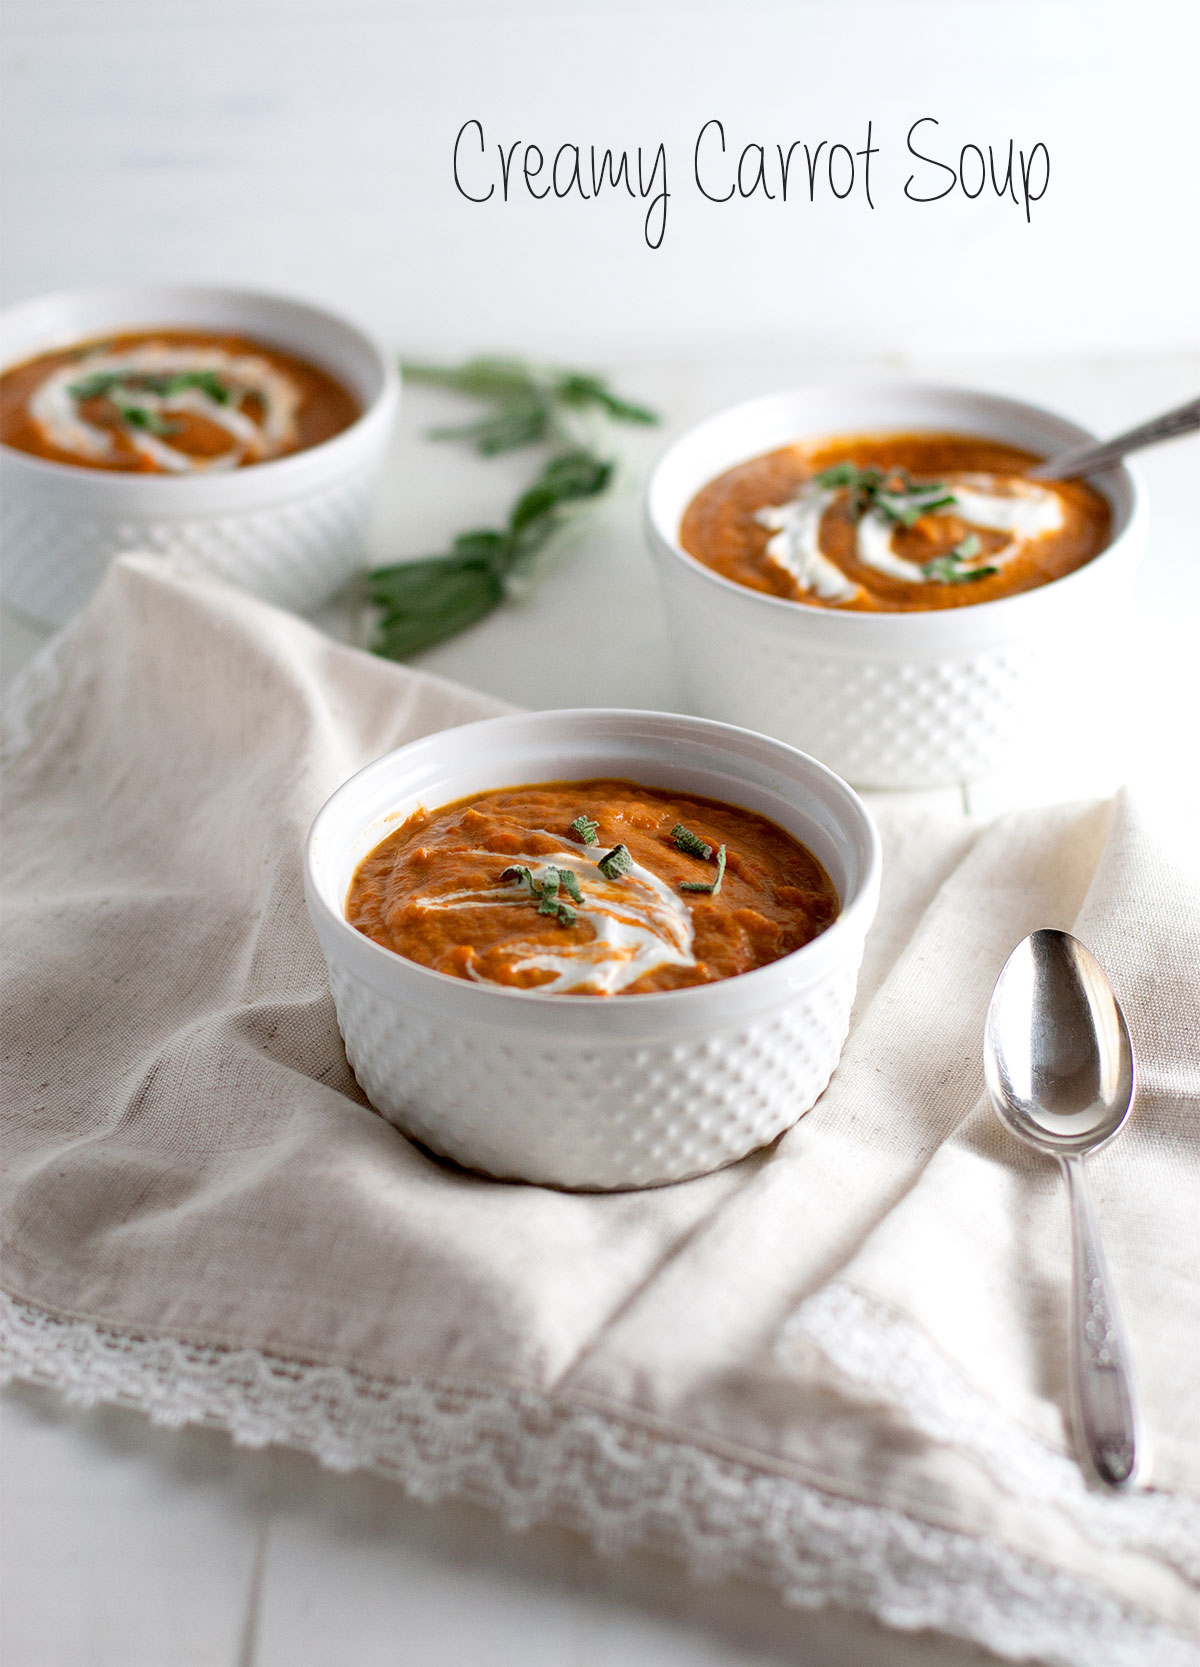 http://www.kimshealthyeats.com/wp-content/uploads/2015/02/Creamy-Carrot-Soup-011.jpg